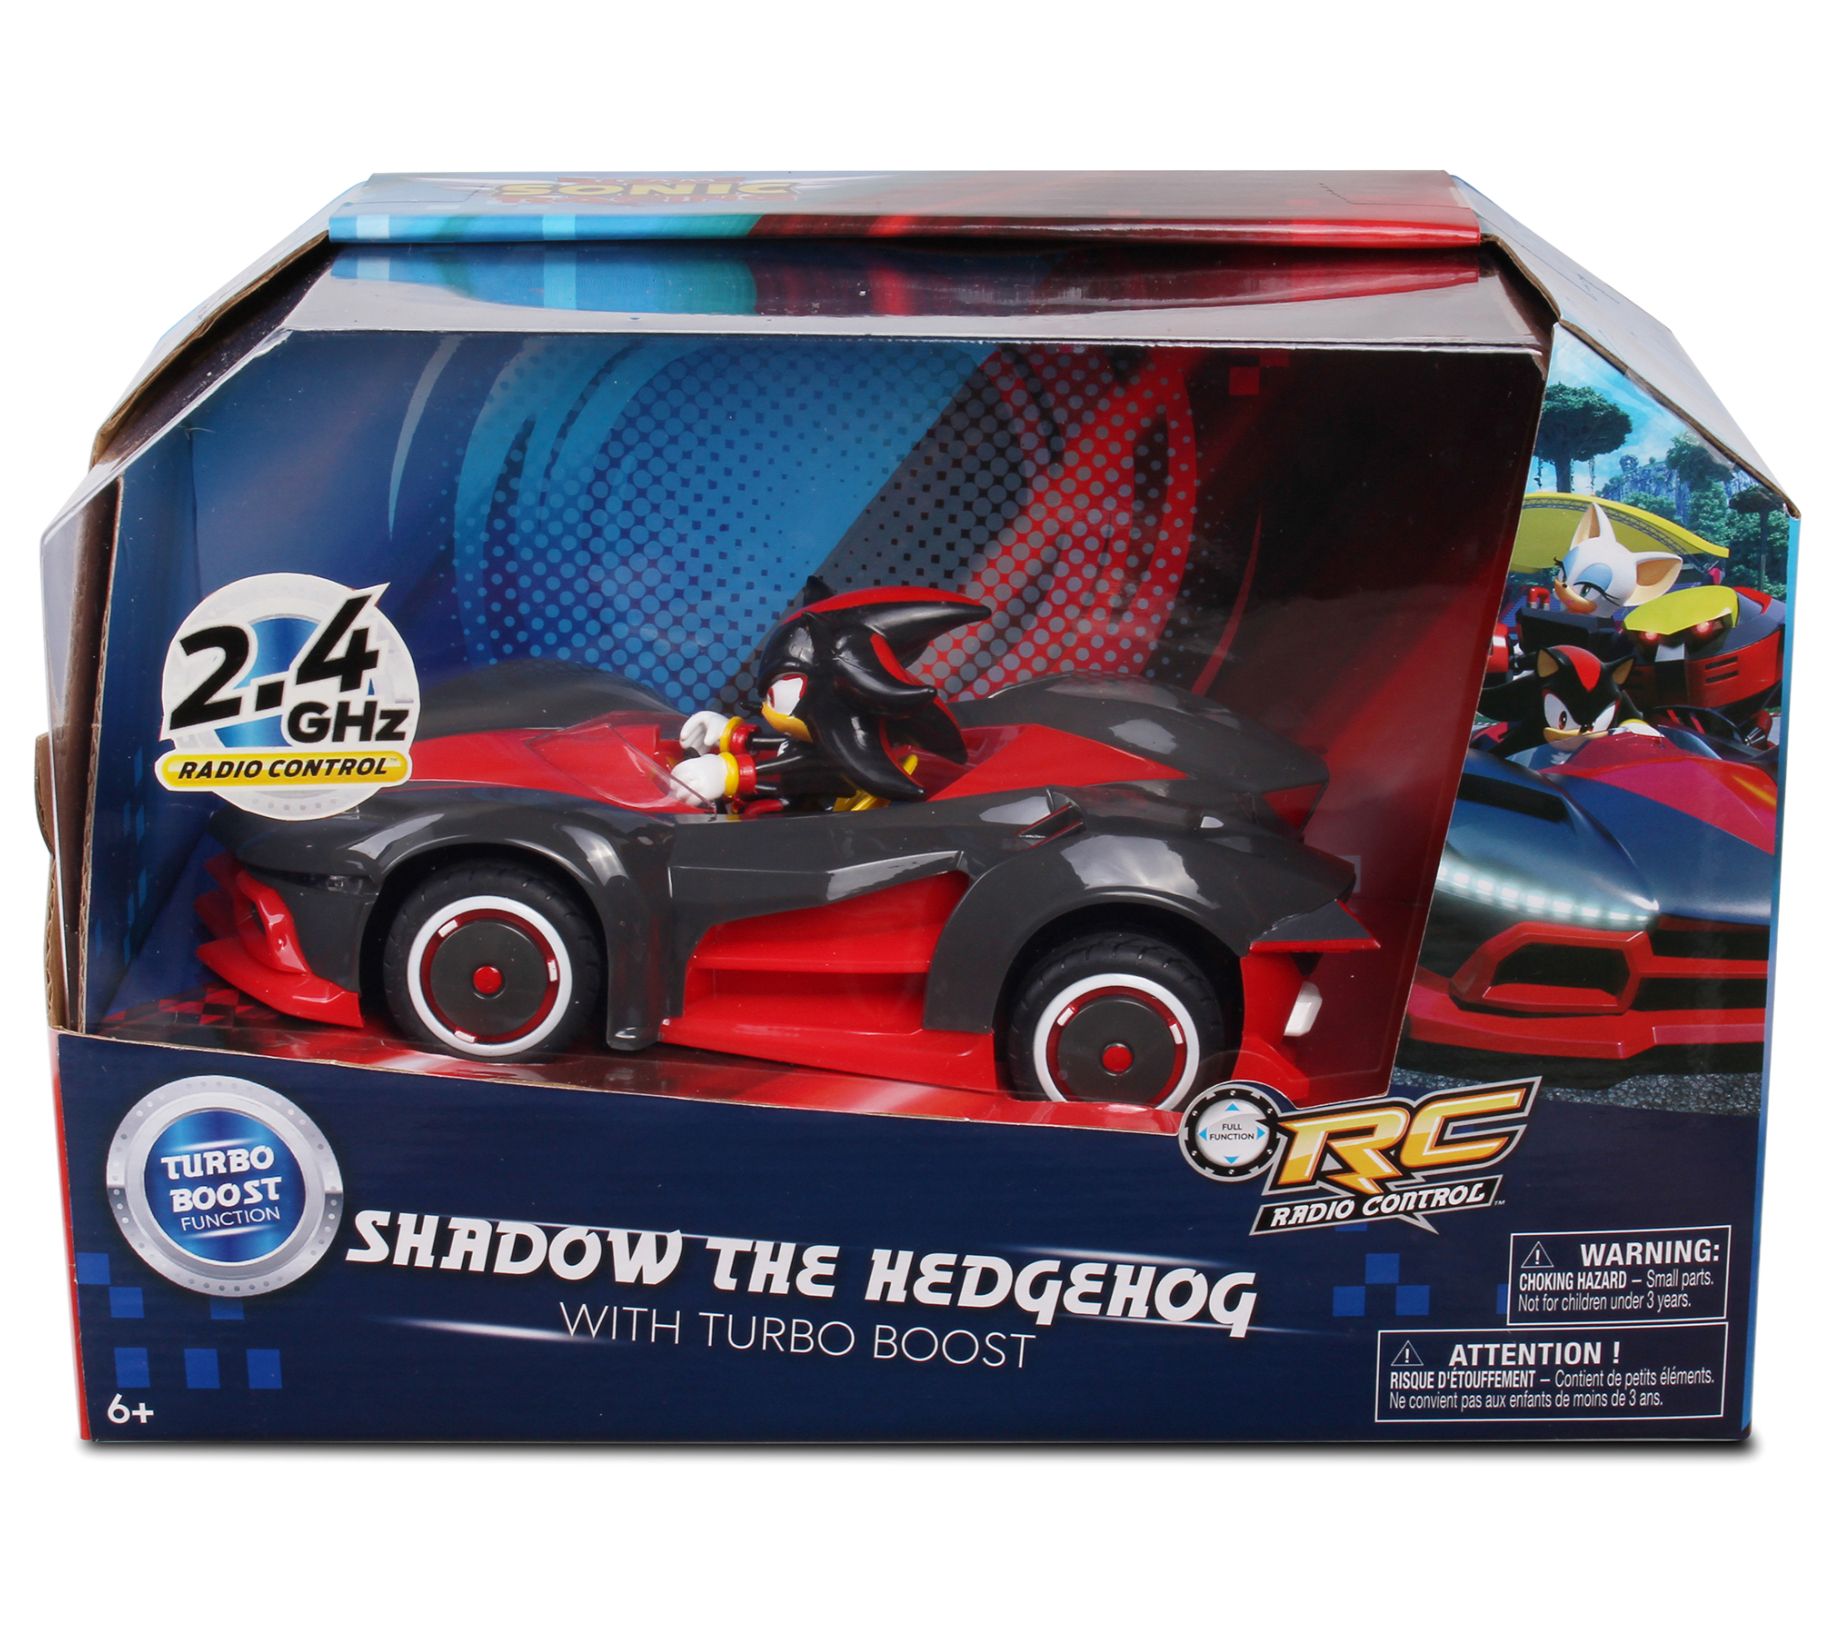 Stream 25 free Shadow The Hedgehog + Sonic The Hedgehog radio stations